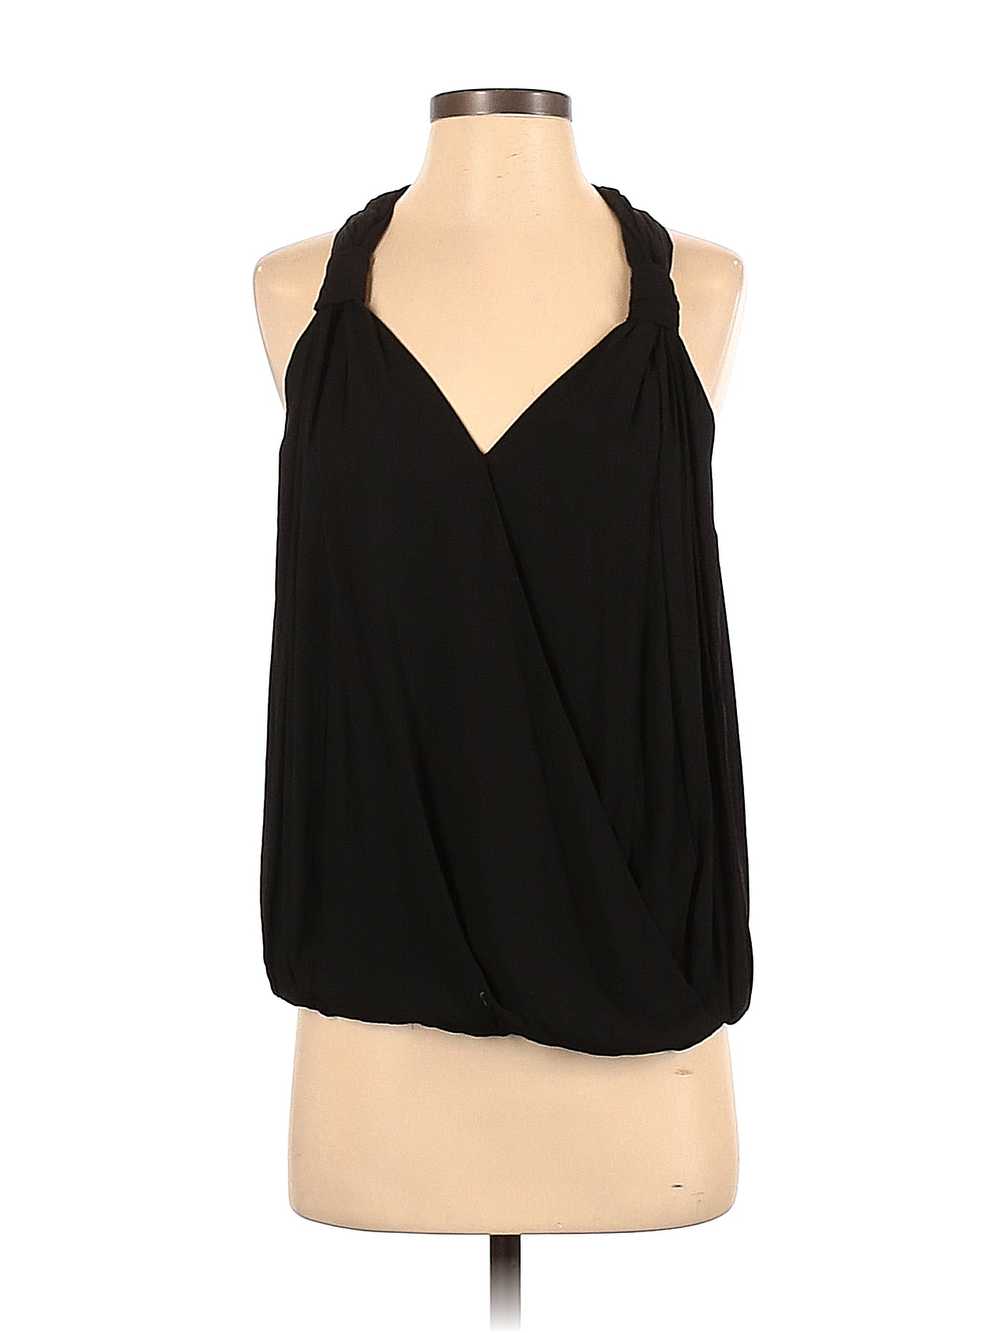 Zara Basic Women Black Sleeveless Blouse XS - image 1